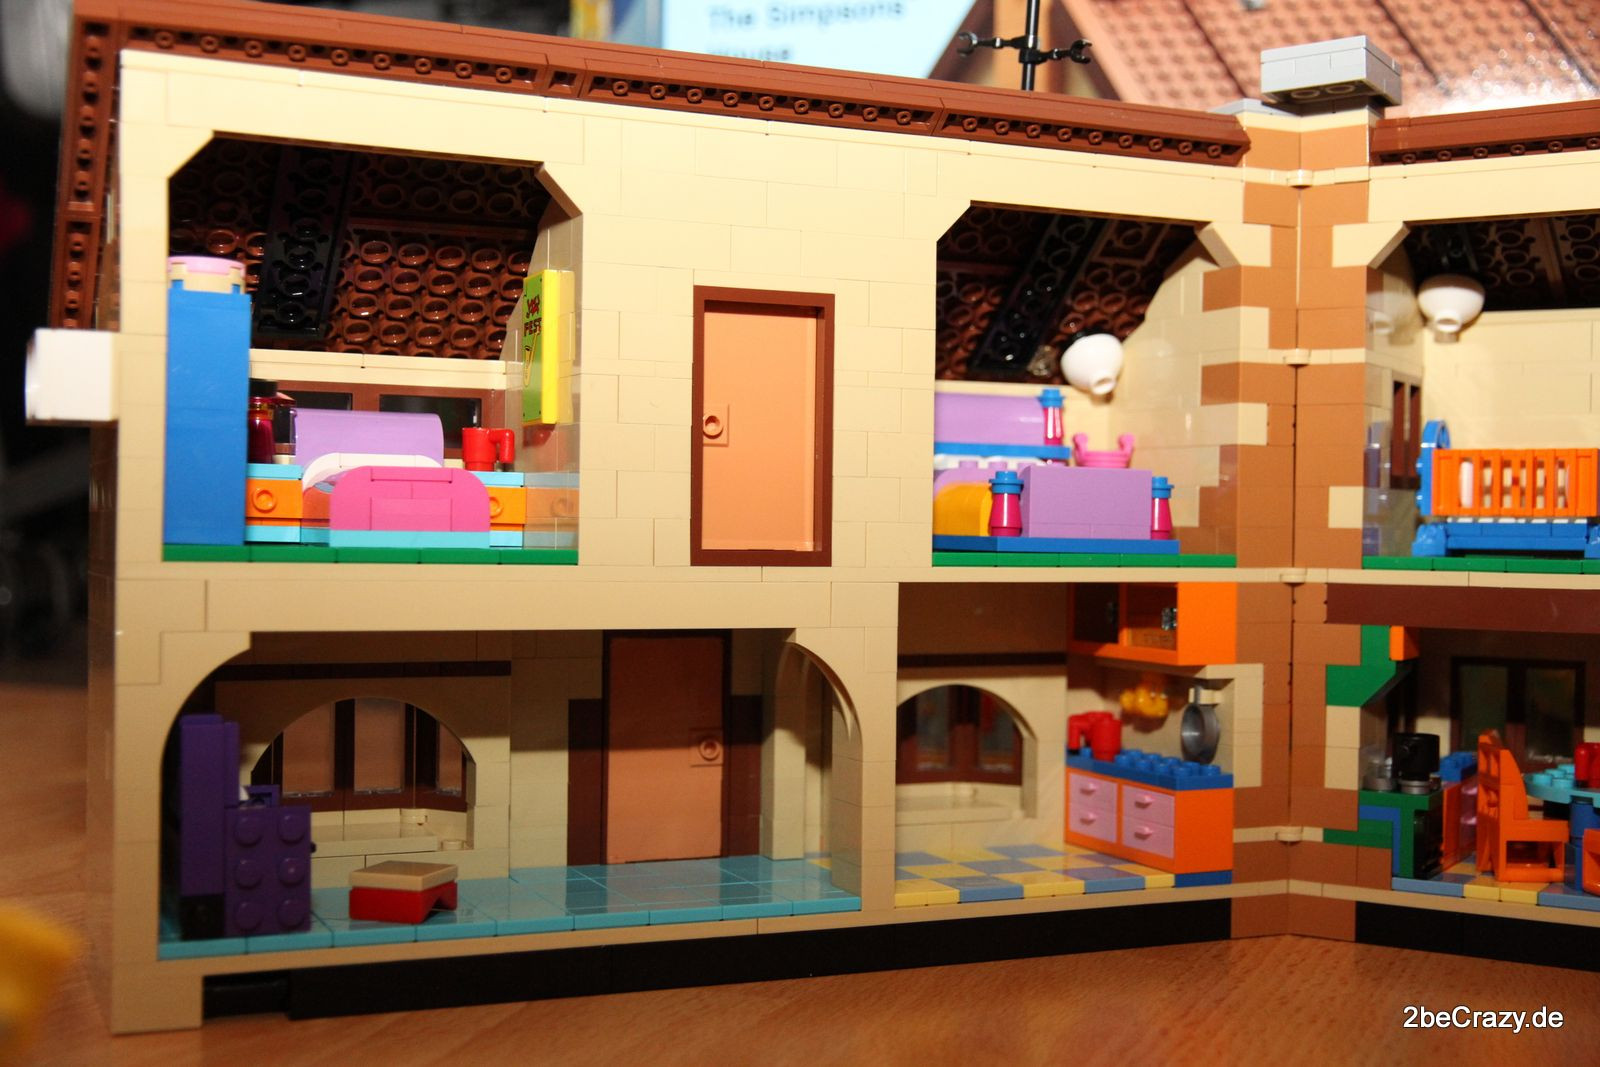 Lego Simpsons Haus
 simpsons haus lego 51 2beCrazy